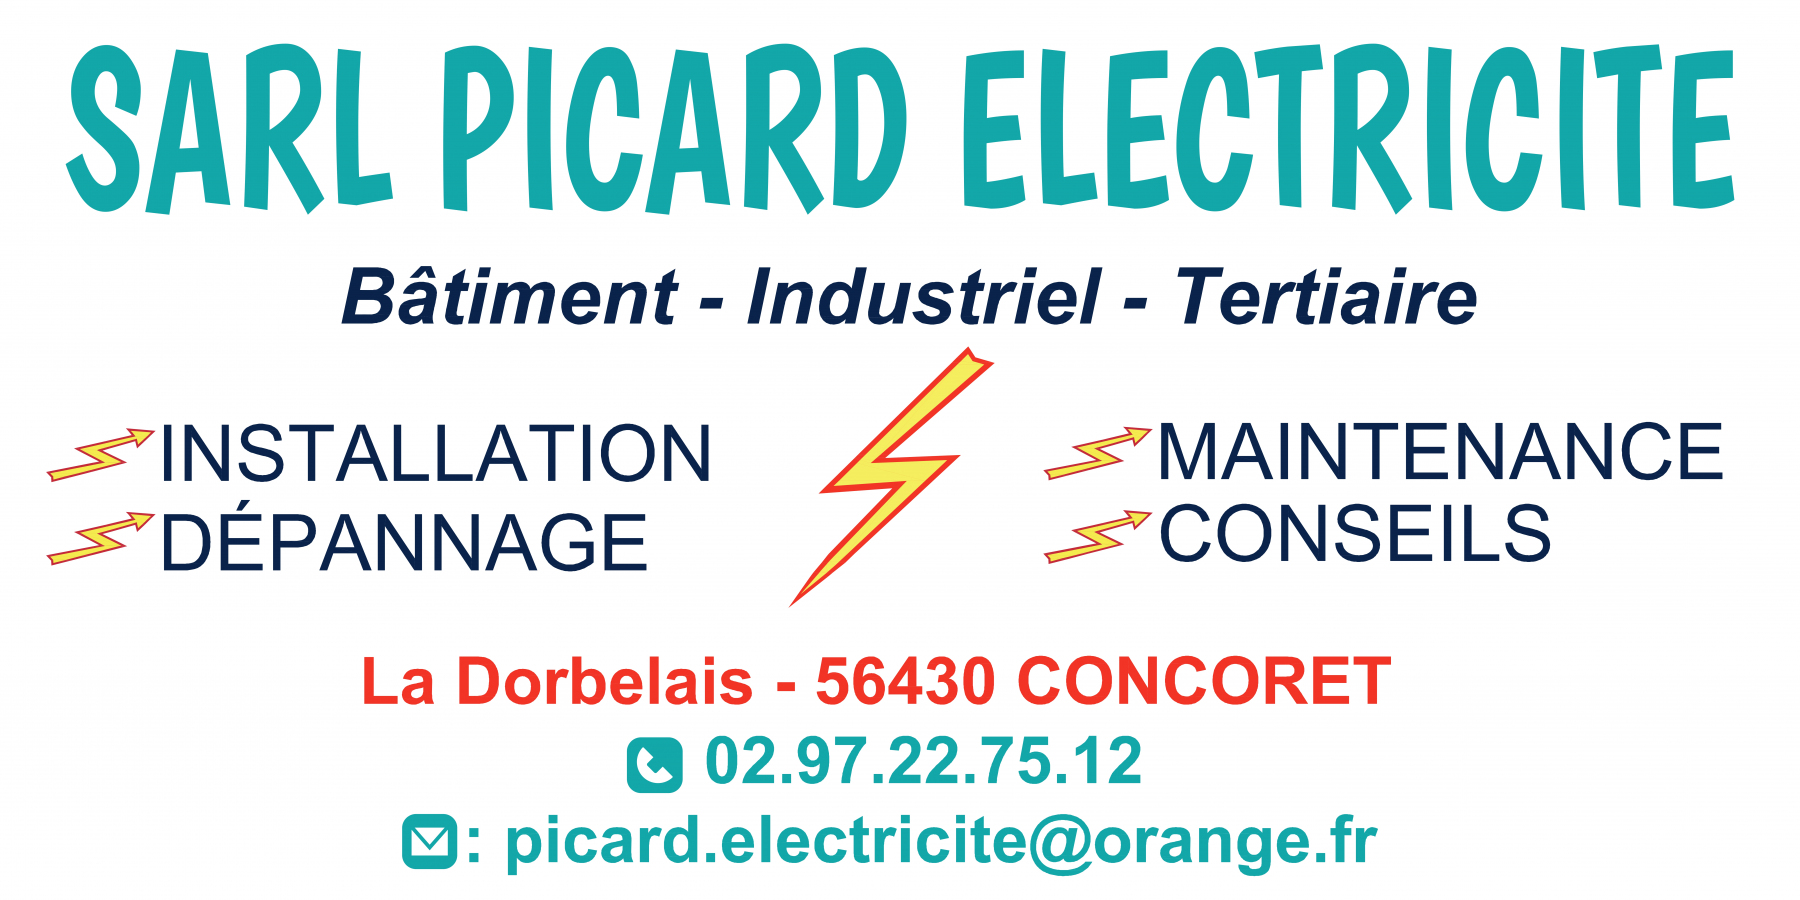 SARL-PICARD-ELECTRICITE